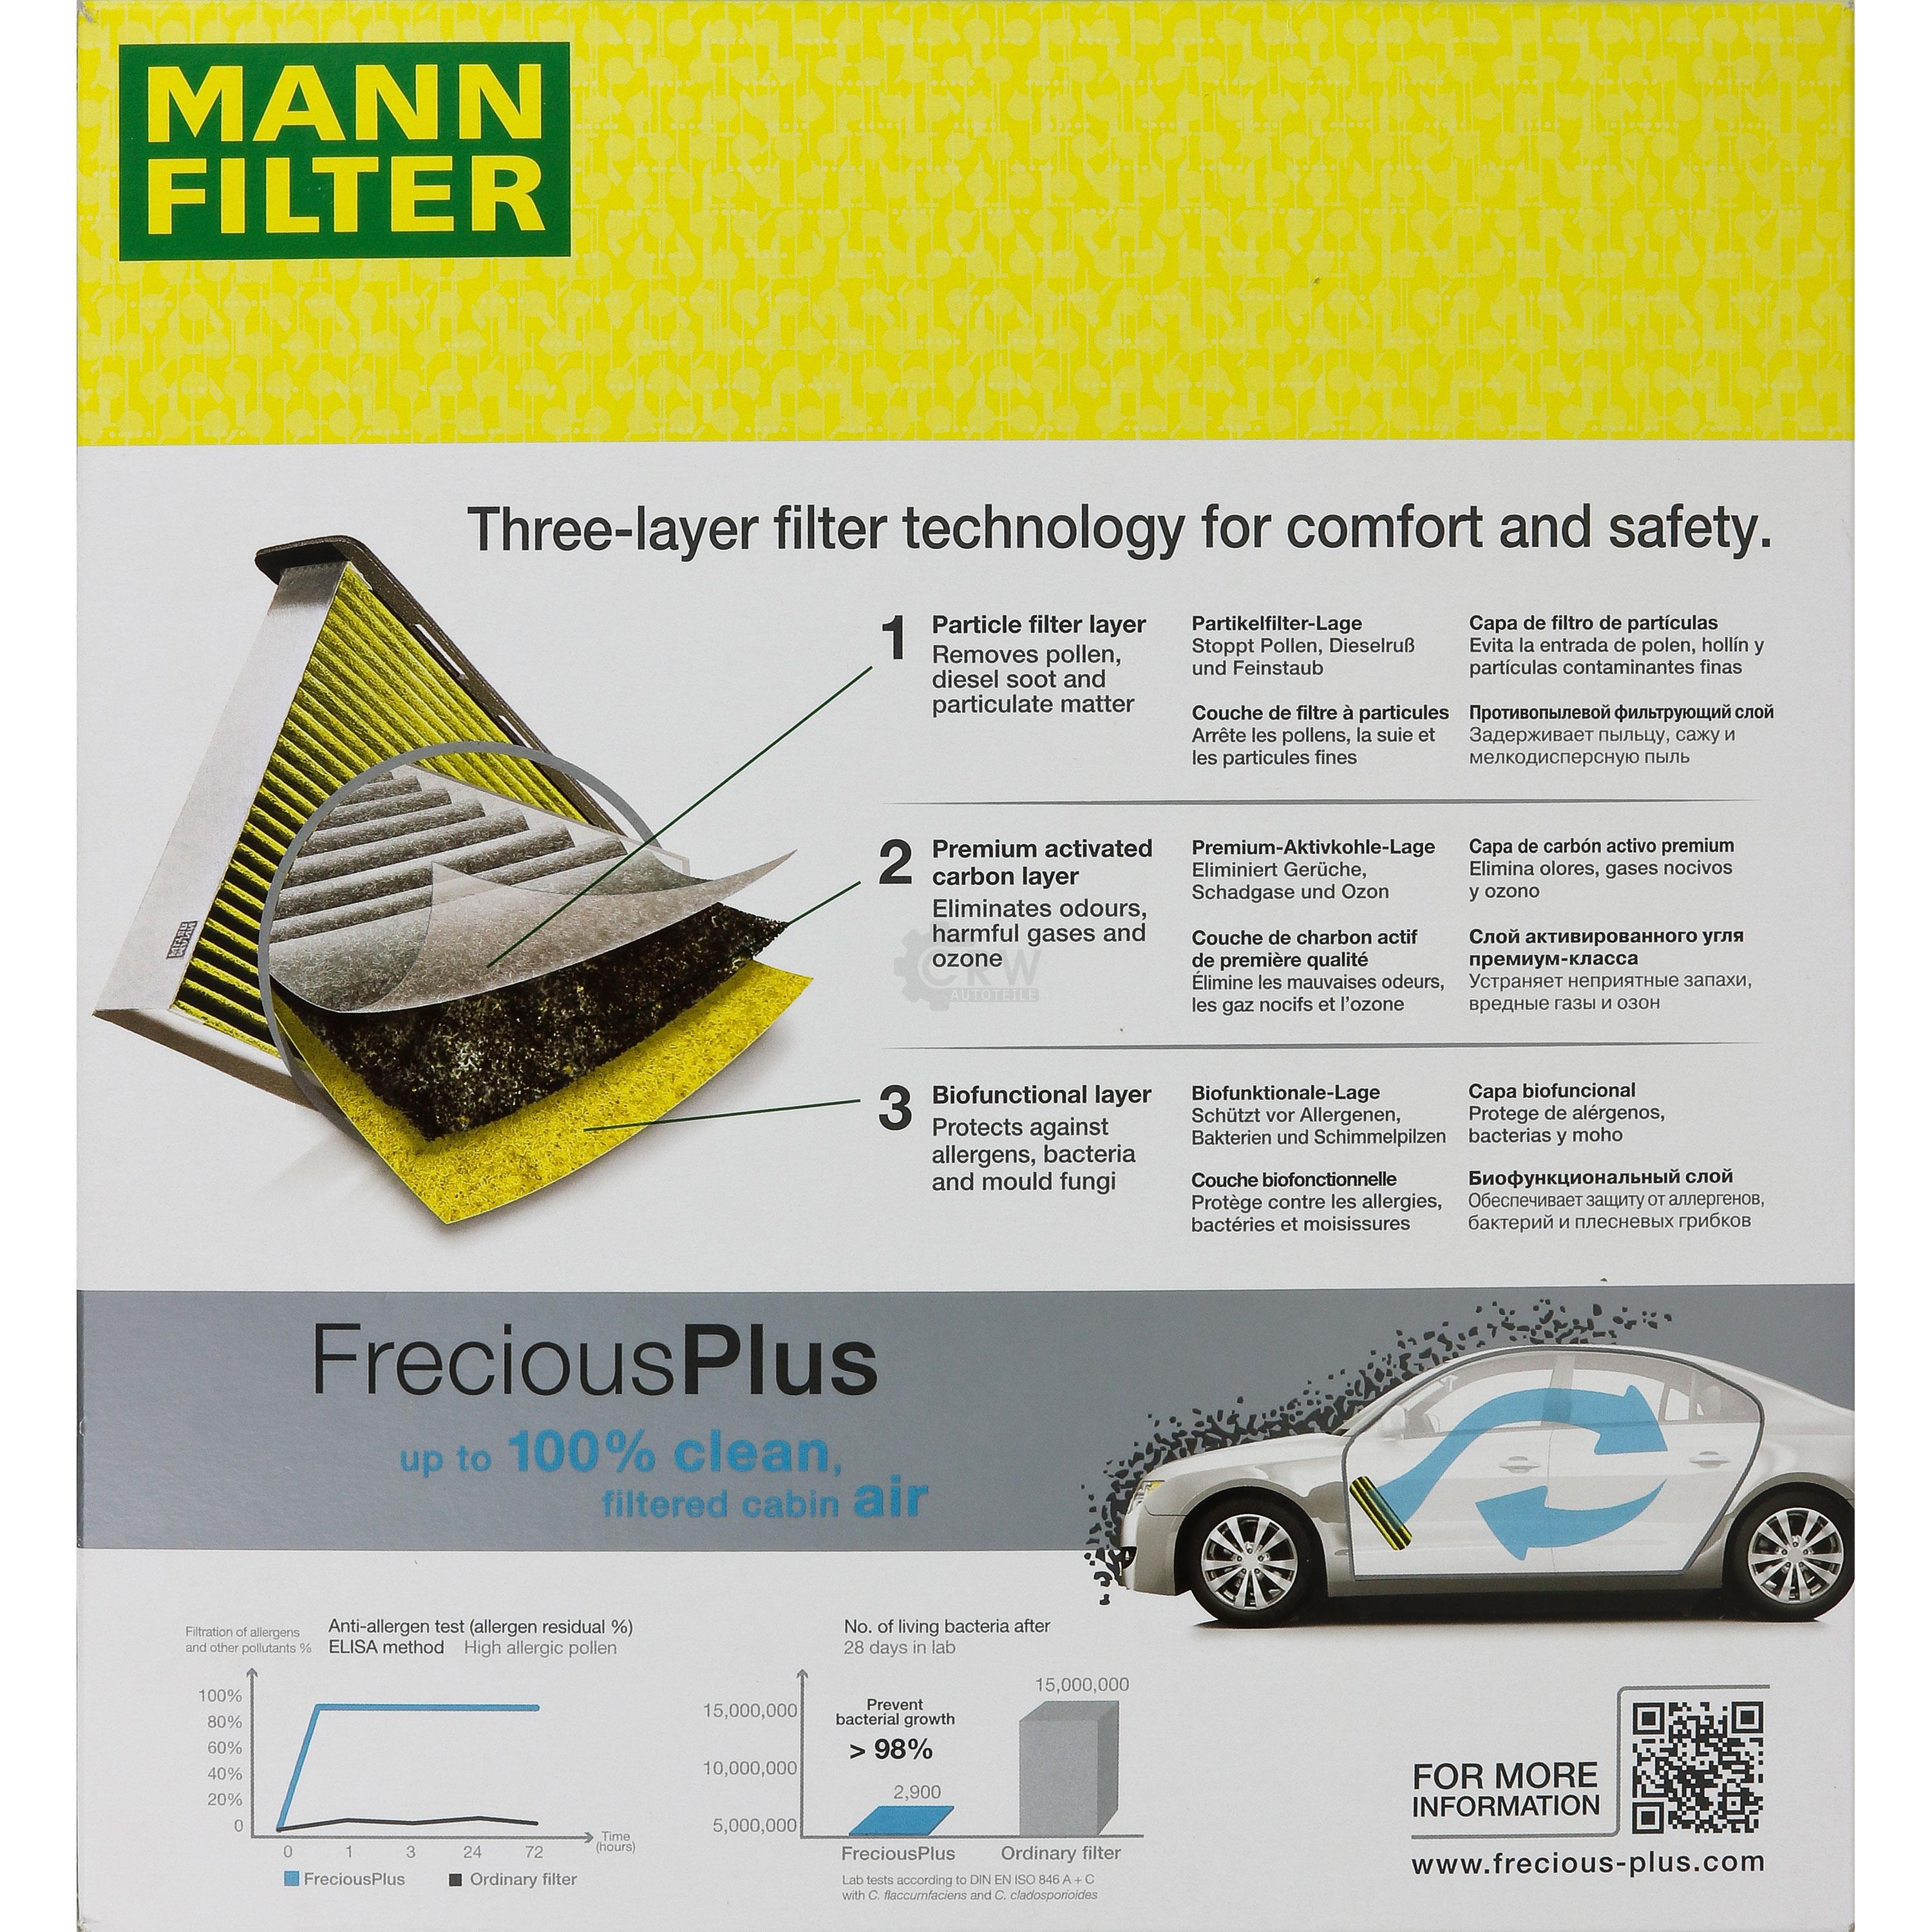 MANN-Filter Innenraumfilter Biofunctional für Allergiker FP 26 009